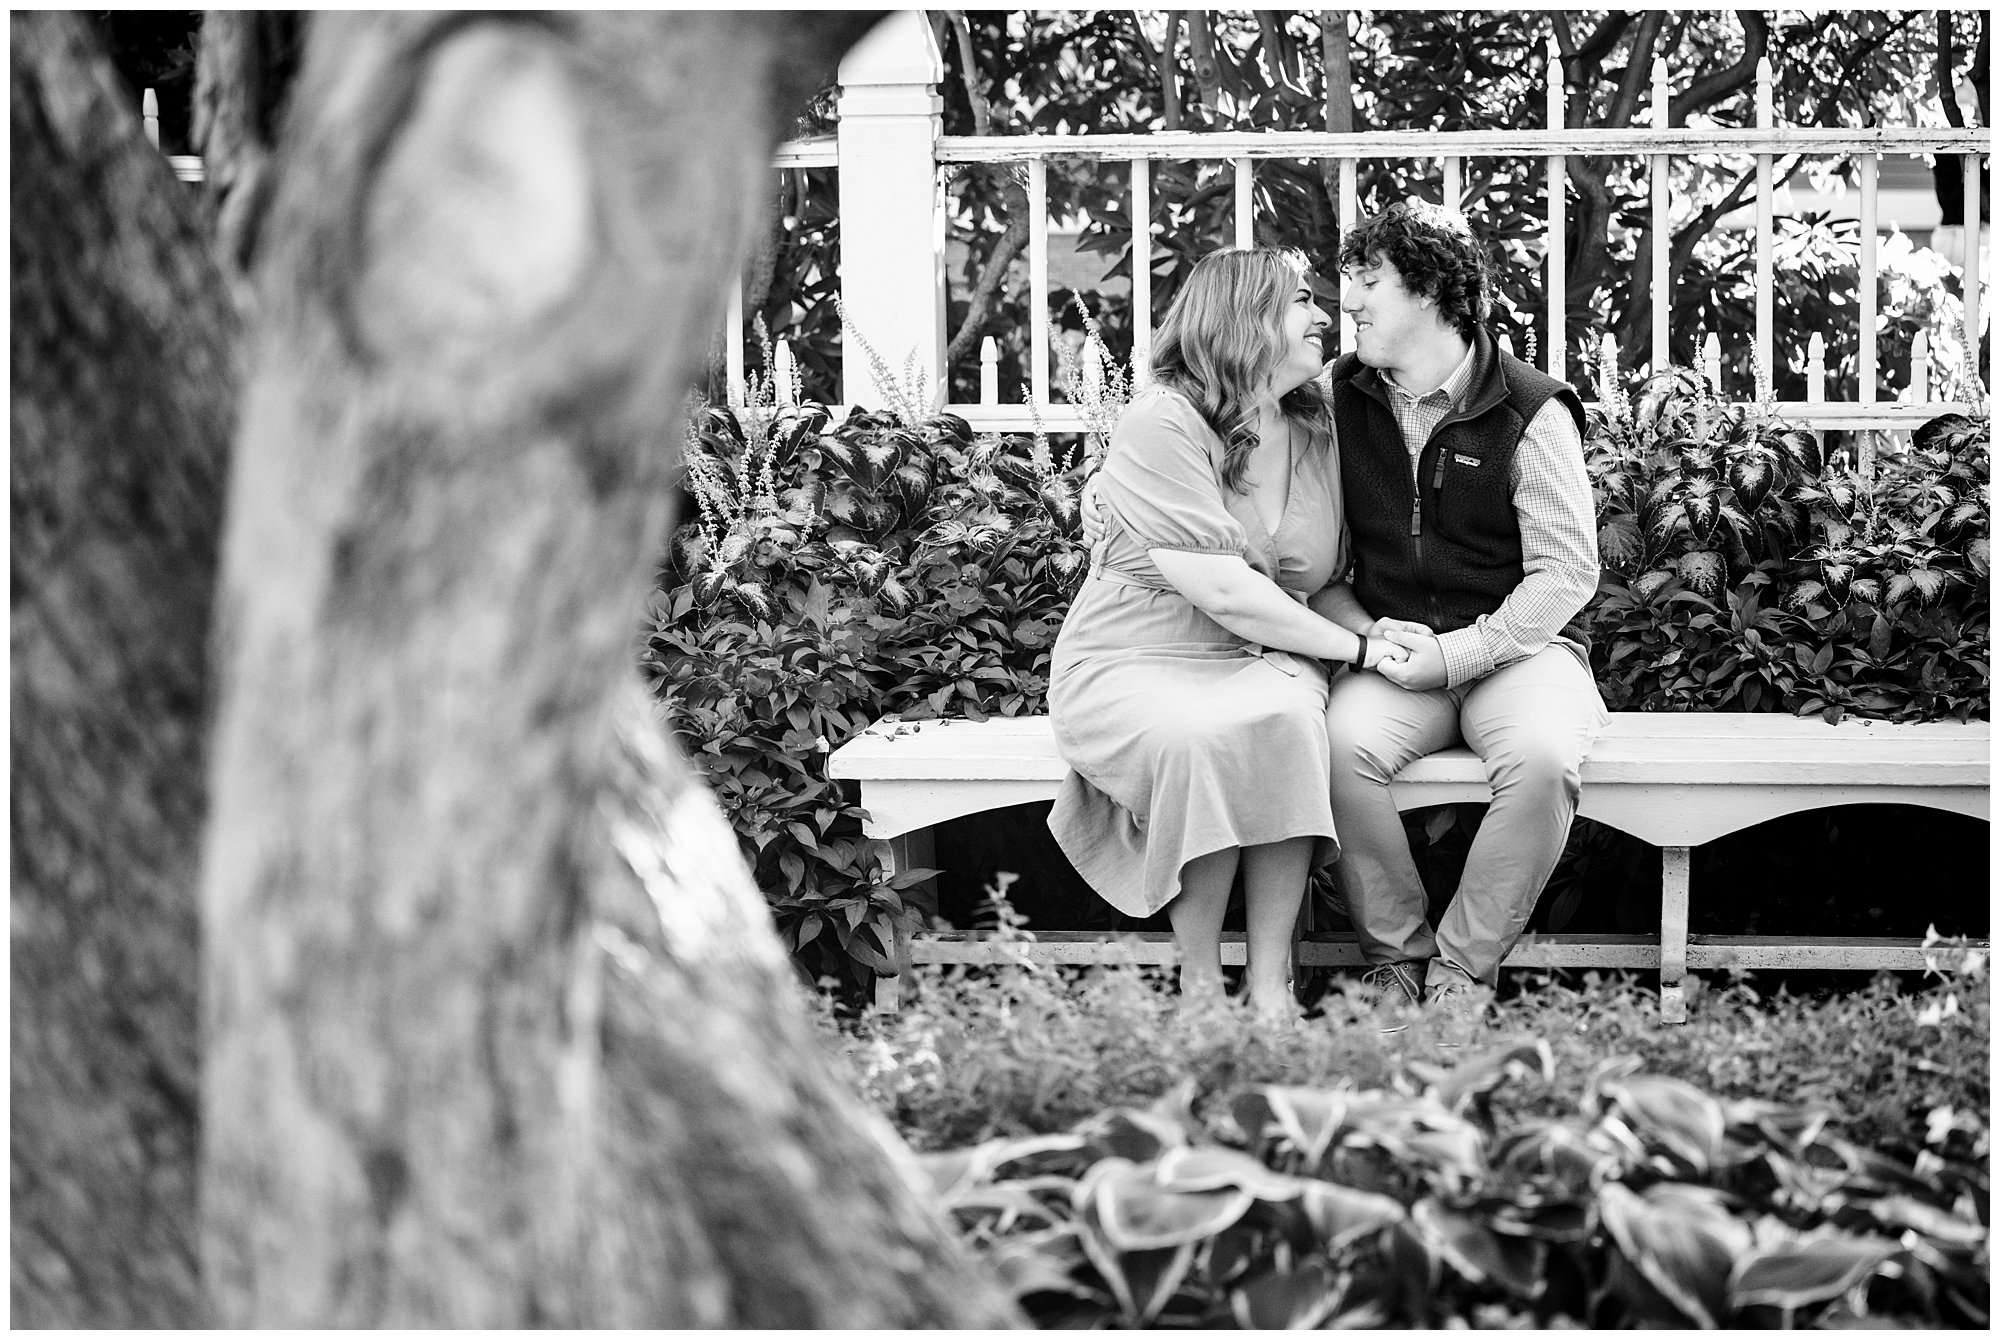 Prescott Park Engagement Photographer, New Hampshire Wedding Photographer, Two Adventurous Souls- 092722_0007.jpg